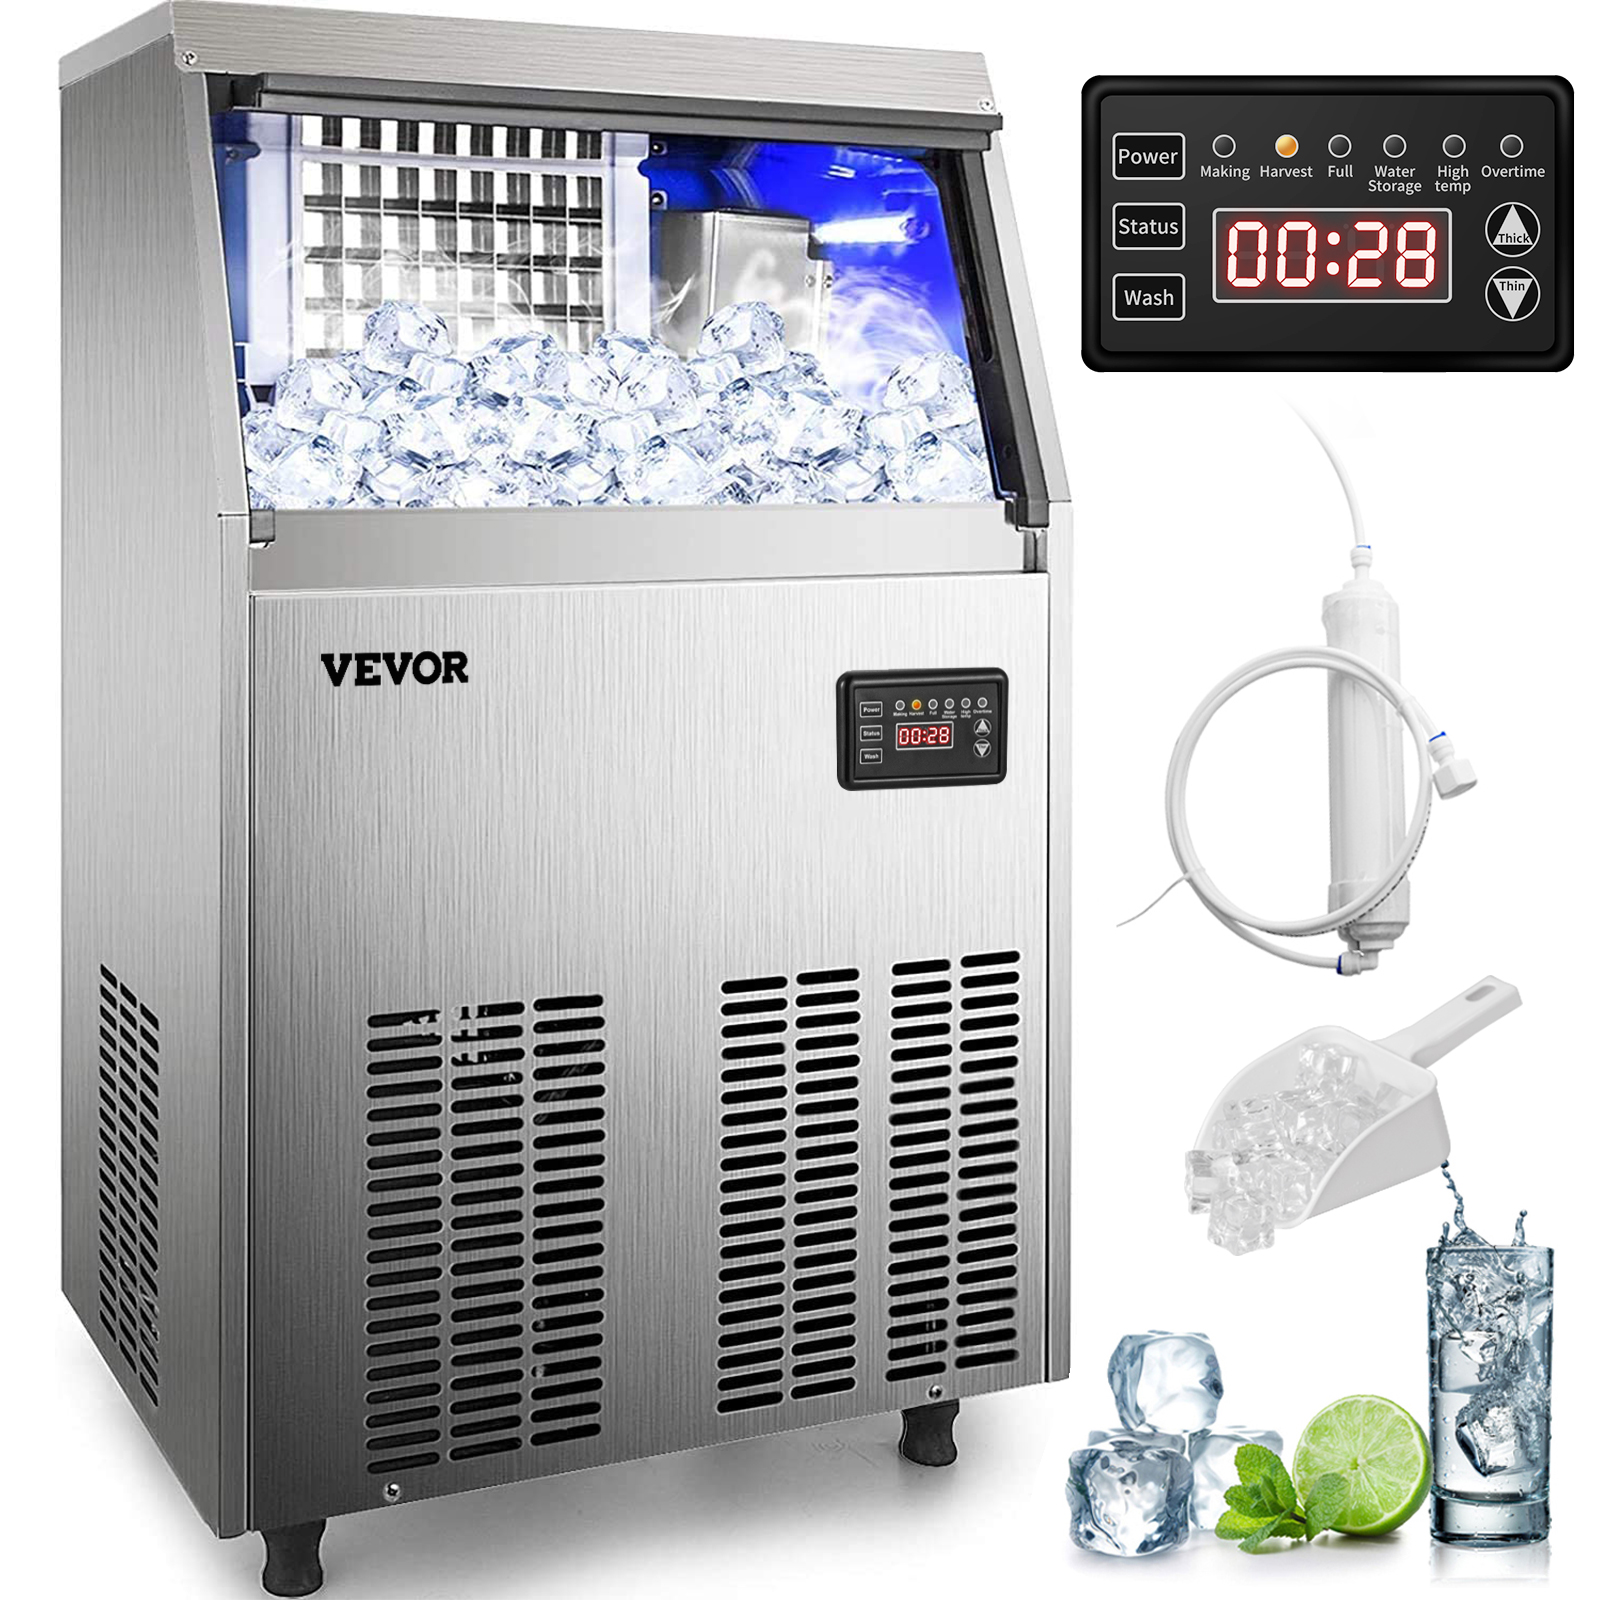 VEVOR Built-In Commercial Ice Maker Stainless Steel Restaurant Ice Cube Machine